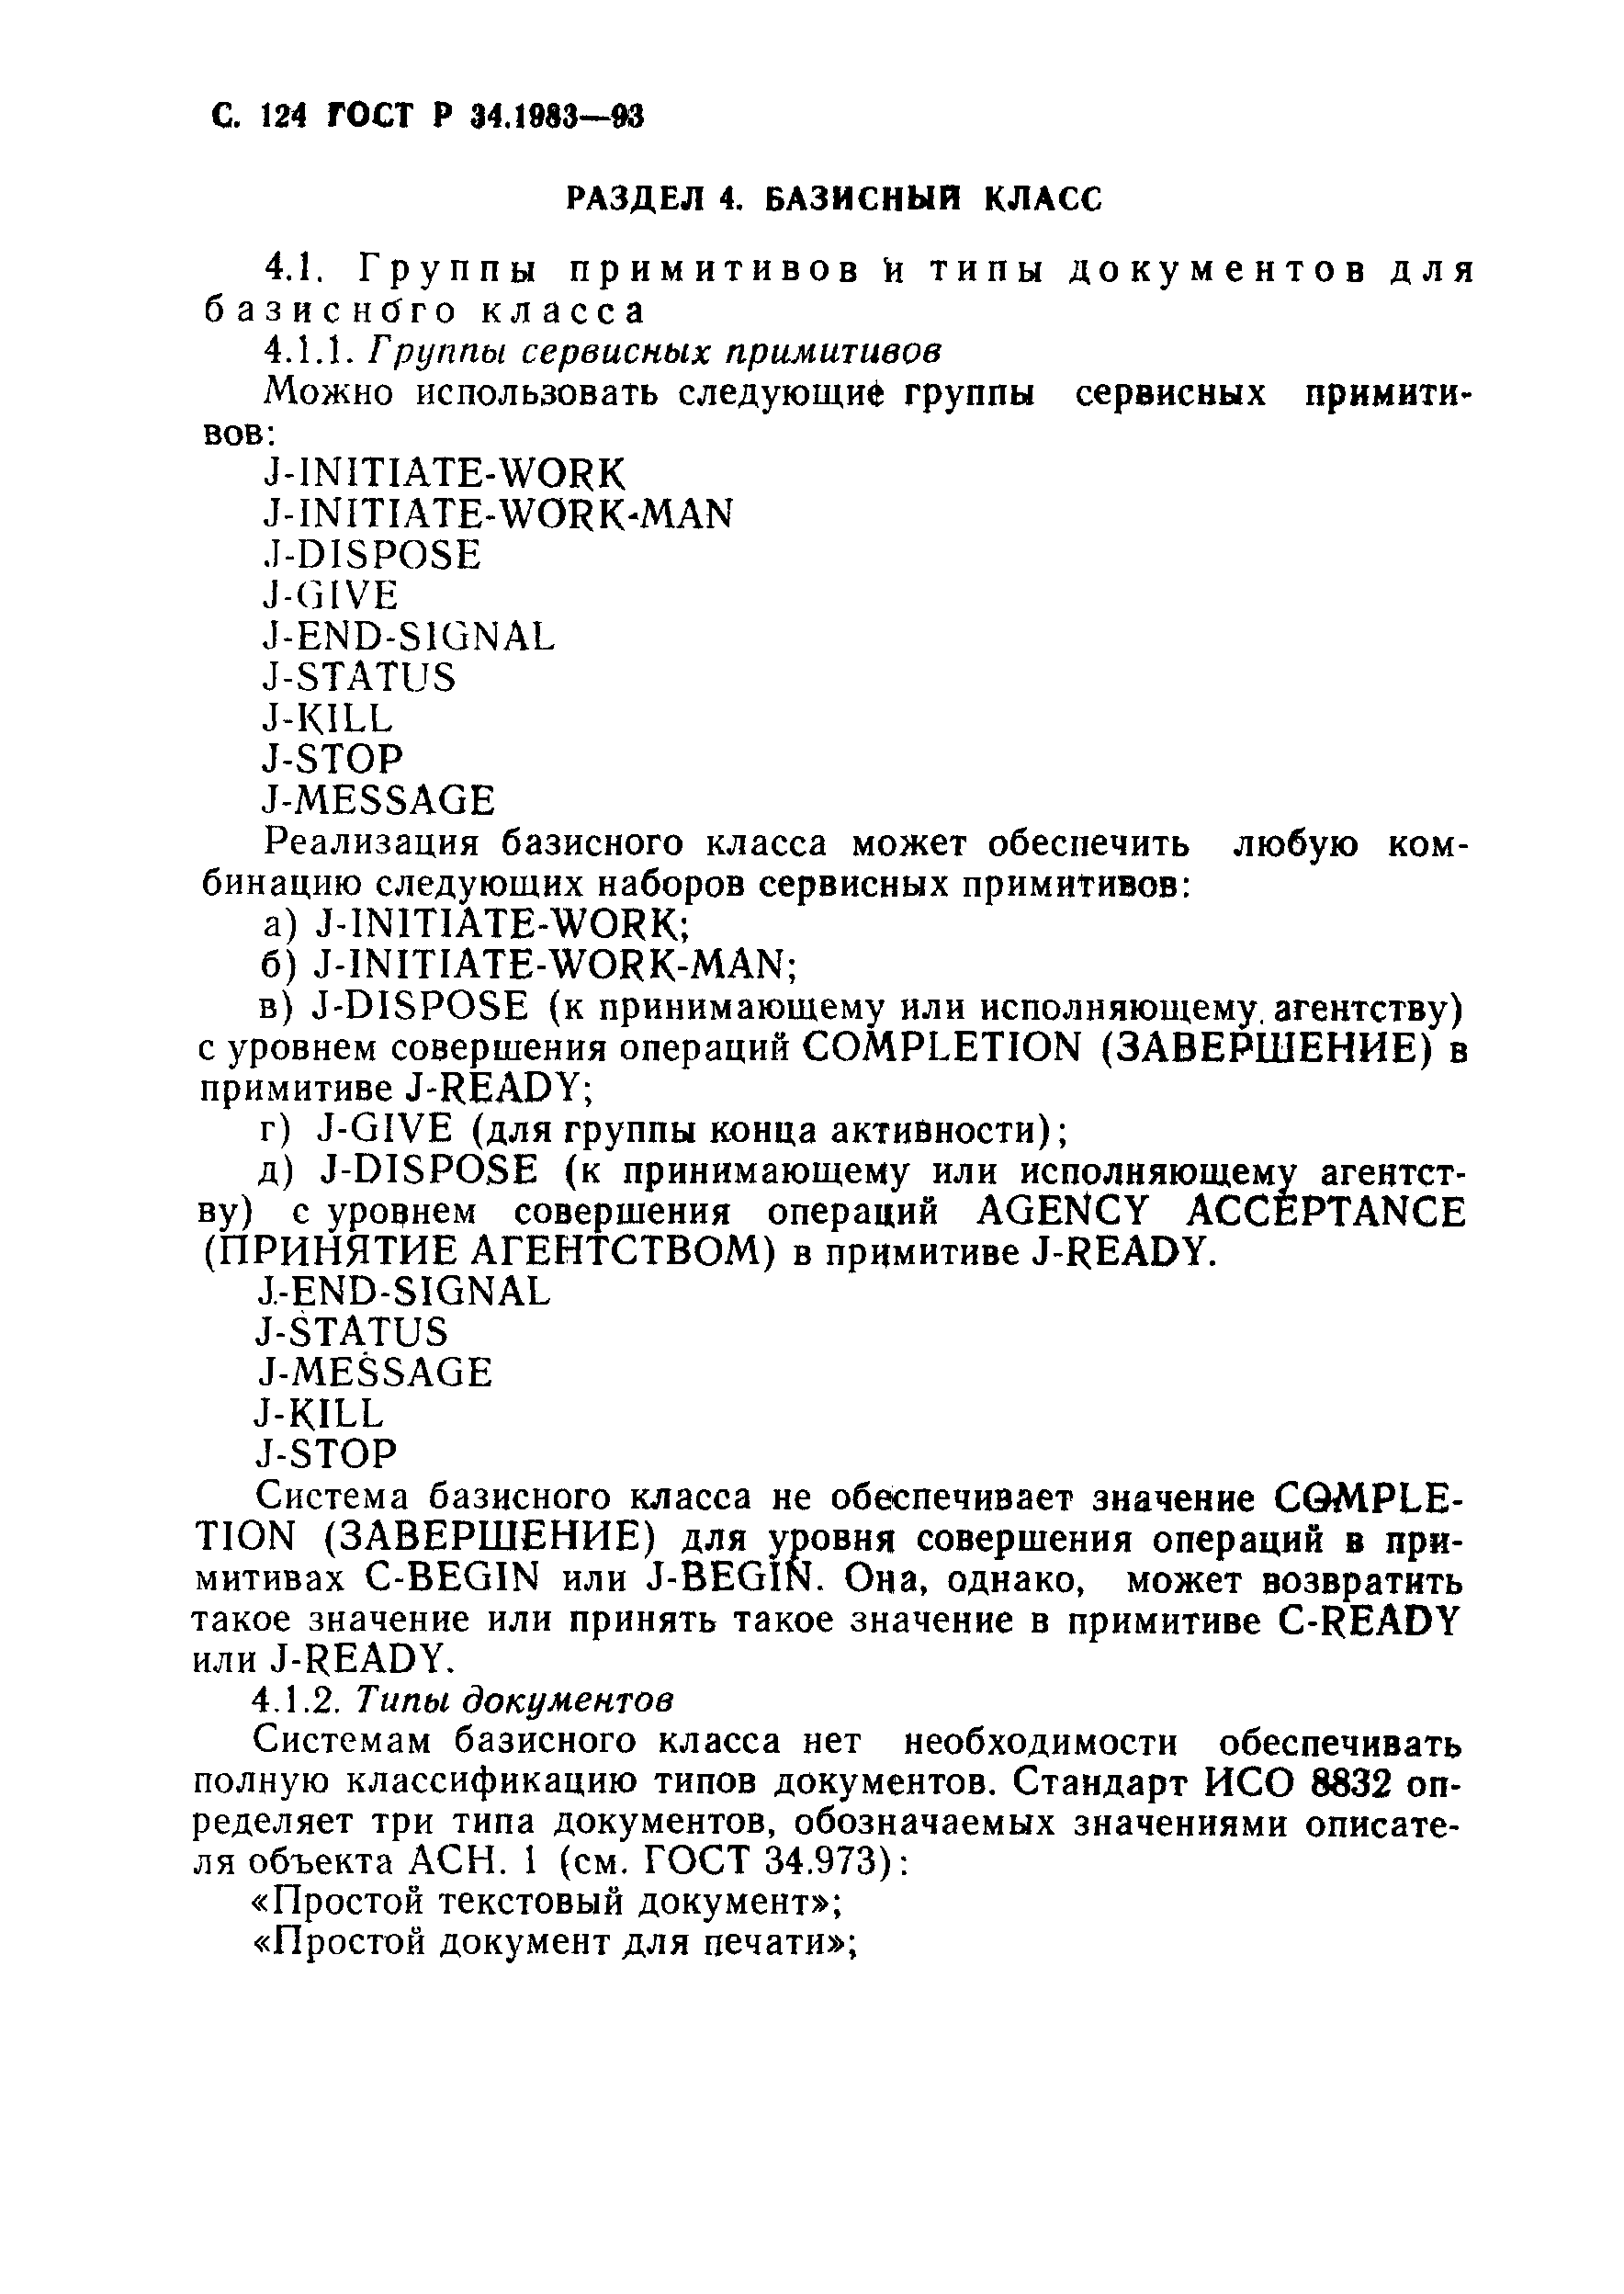 ГОСТ Р 34.1983-93. Страница 125